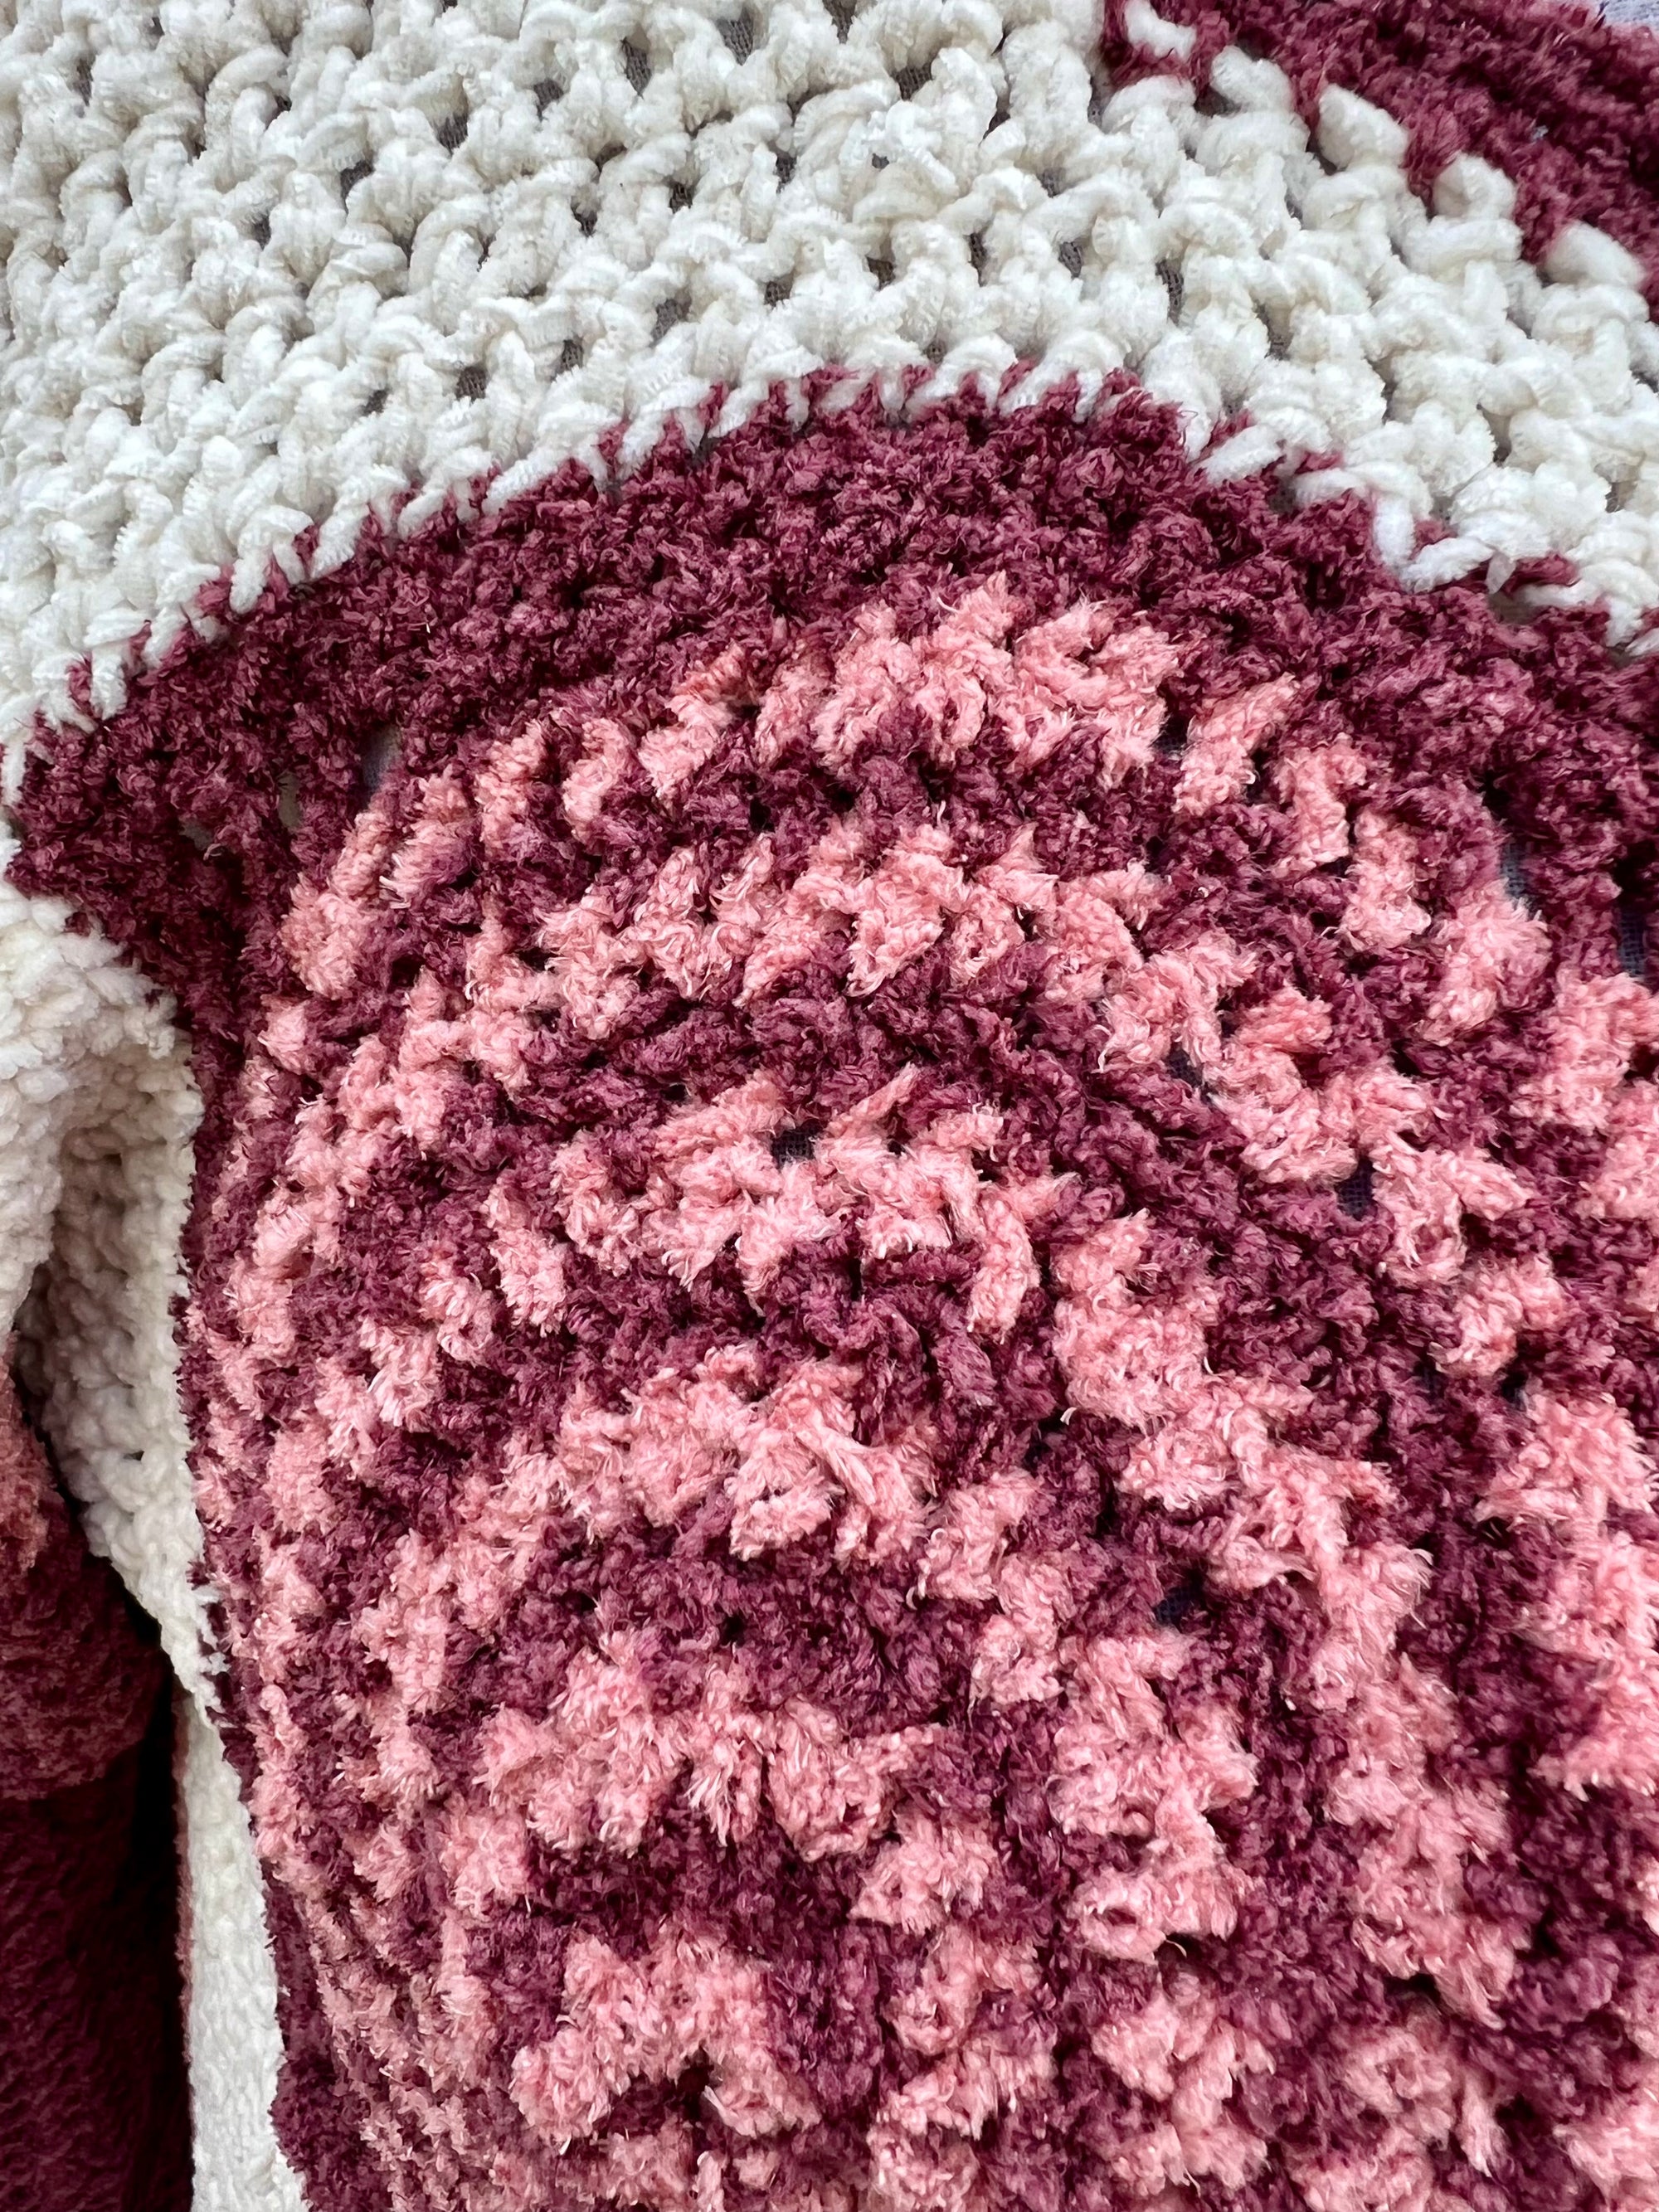 Cardigan crochet Spirals Chenille in Plum, Blush and Cream